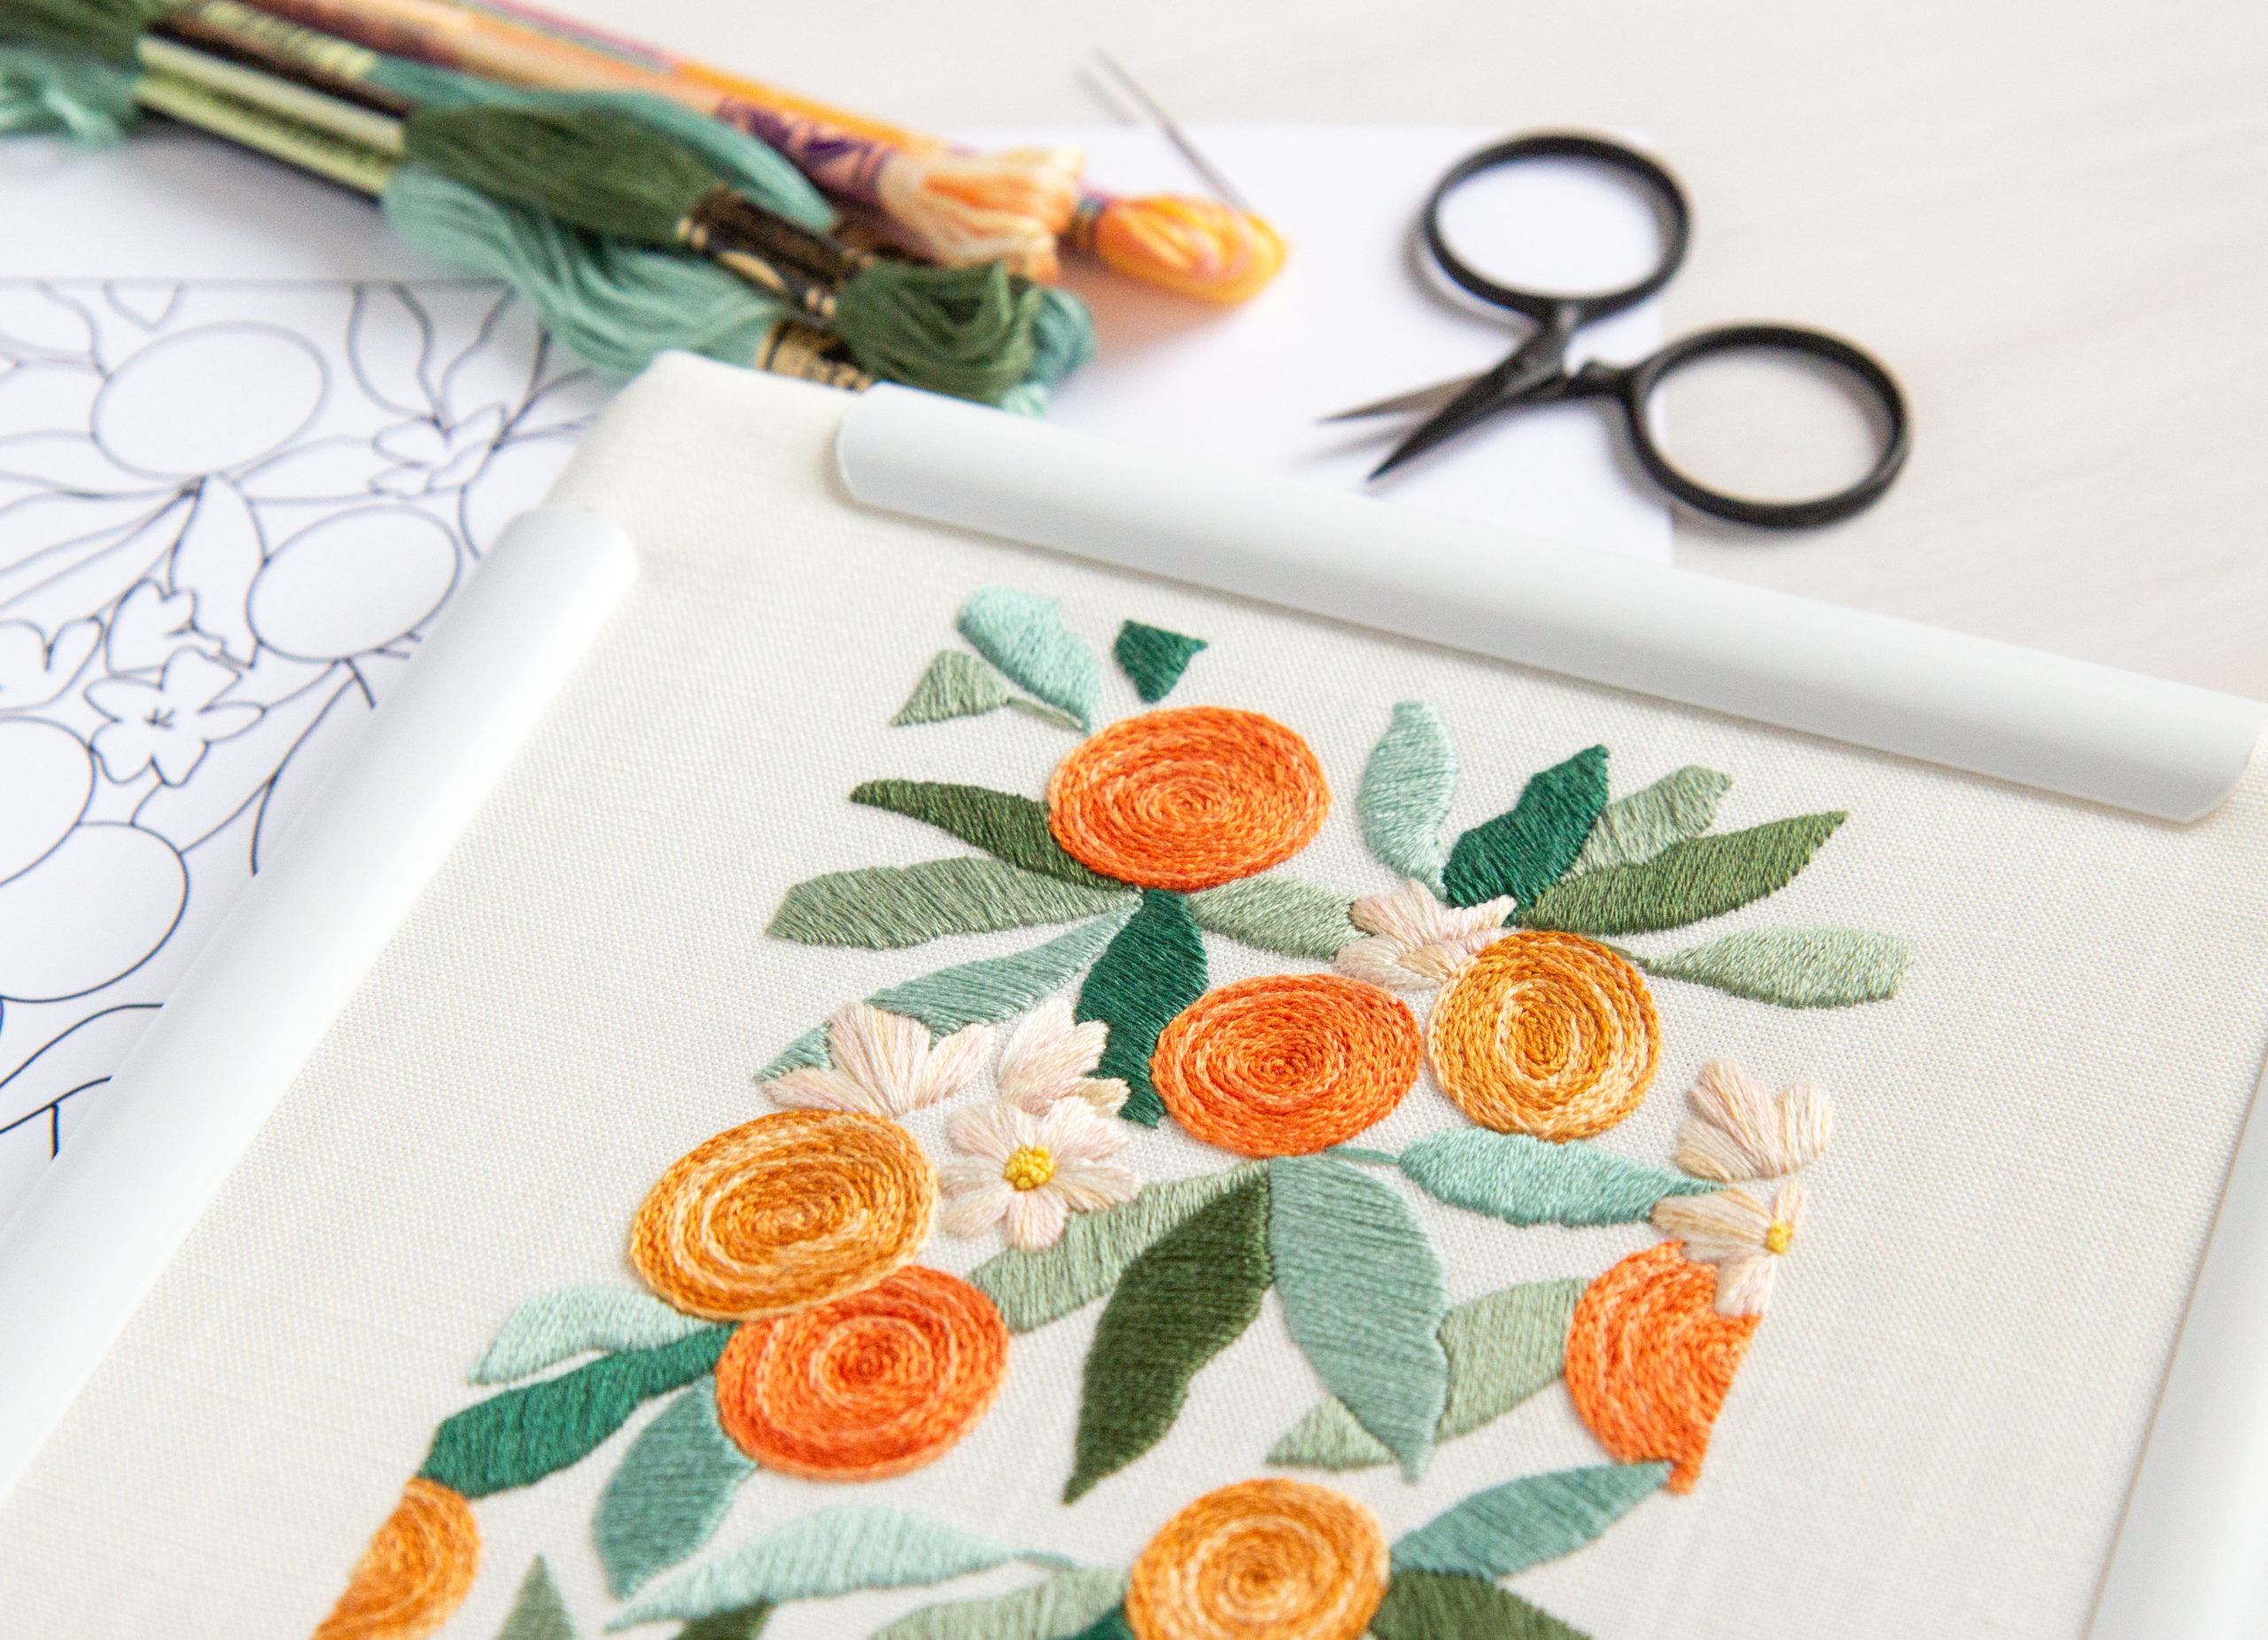 Free Embroidery Pattern / PDF / Printable / Super Creative Embroidery /  Free Embroid…